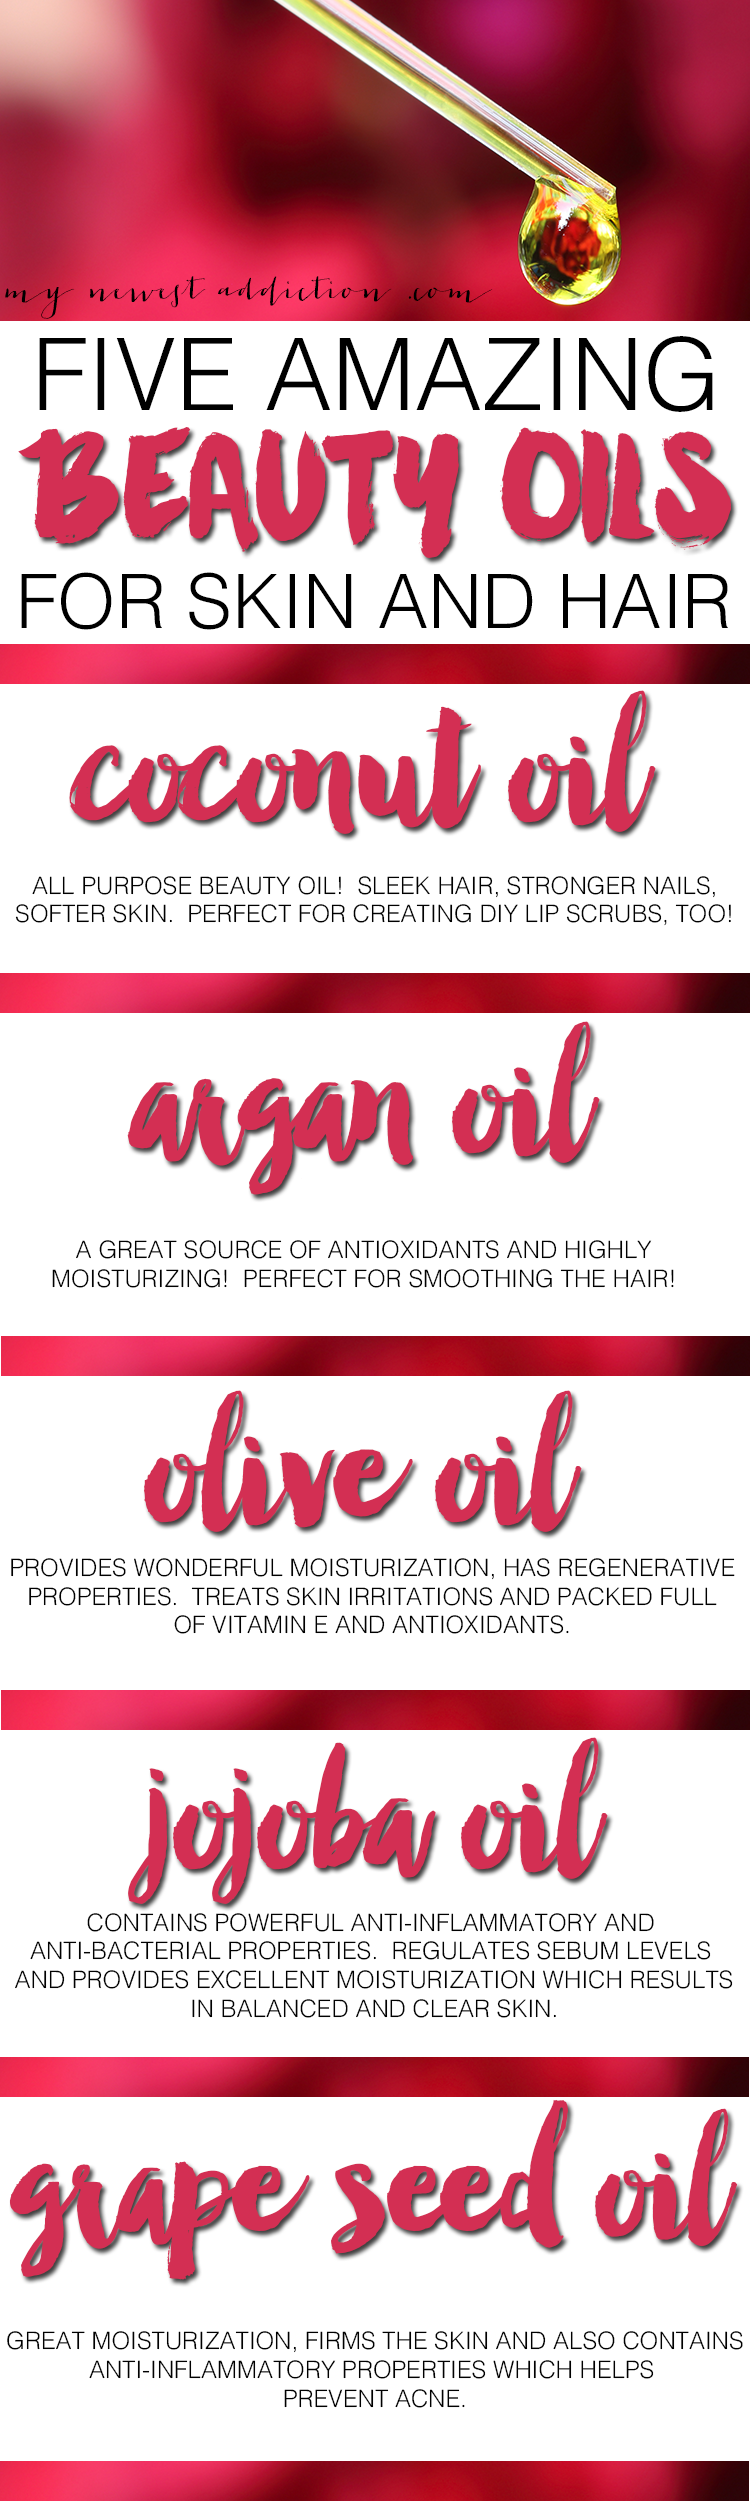 Beauty-oils